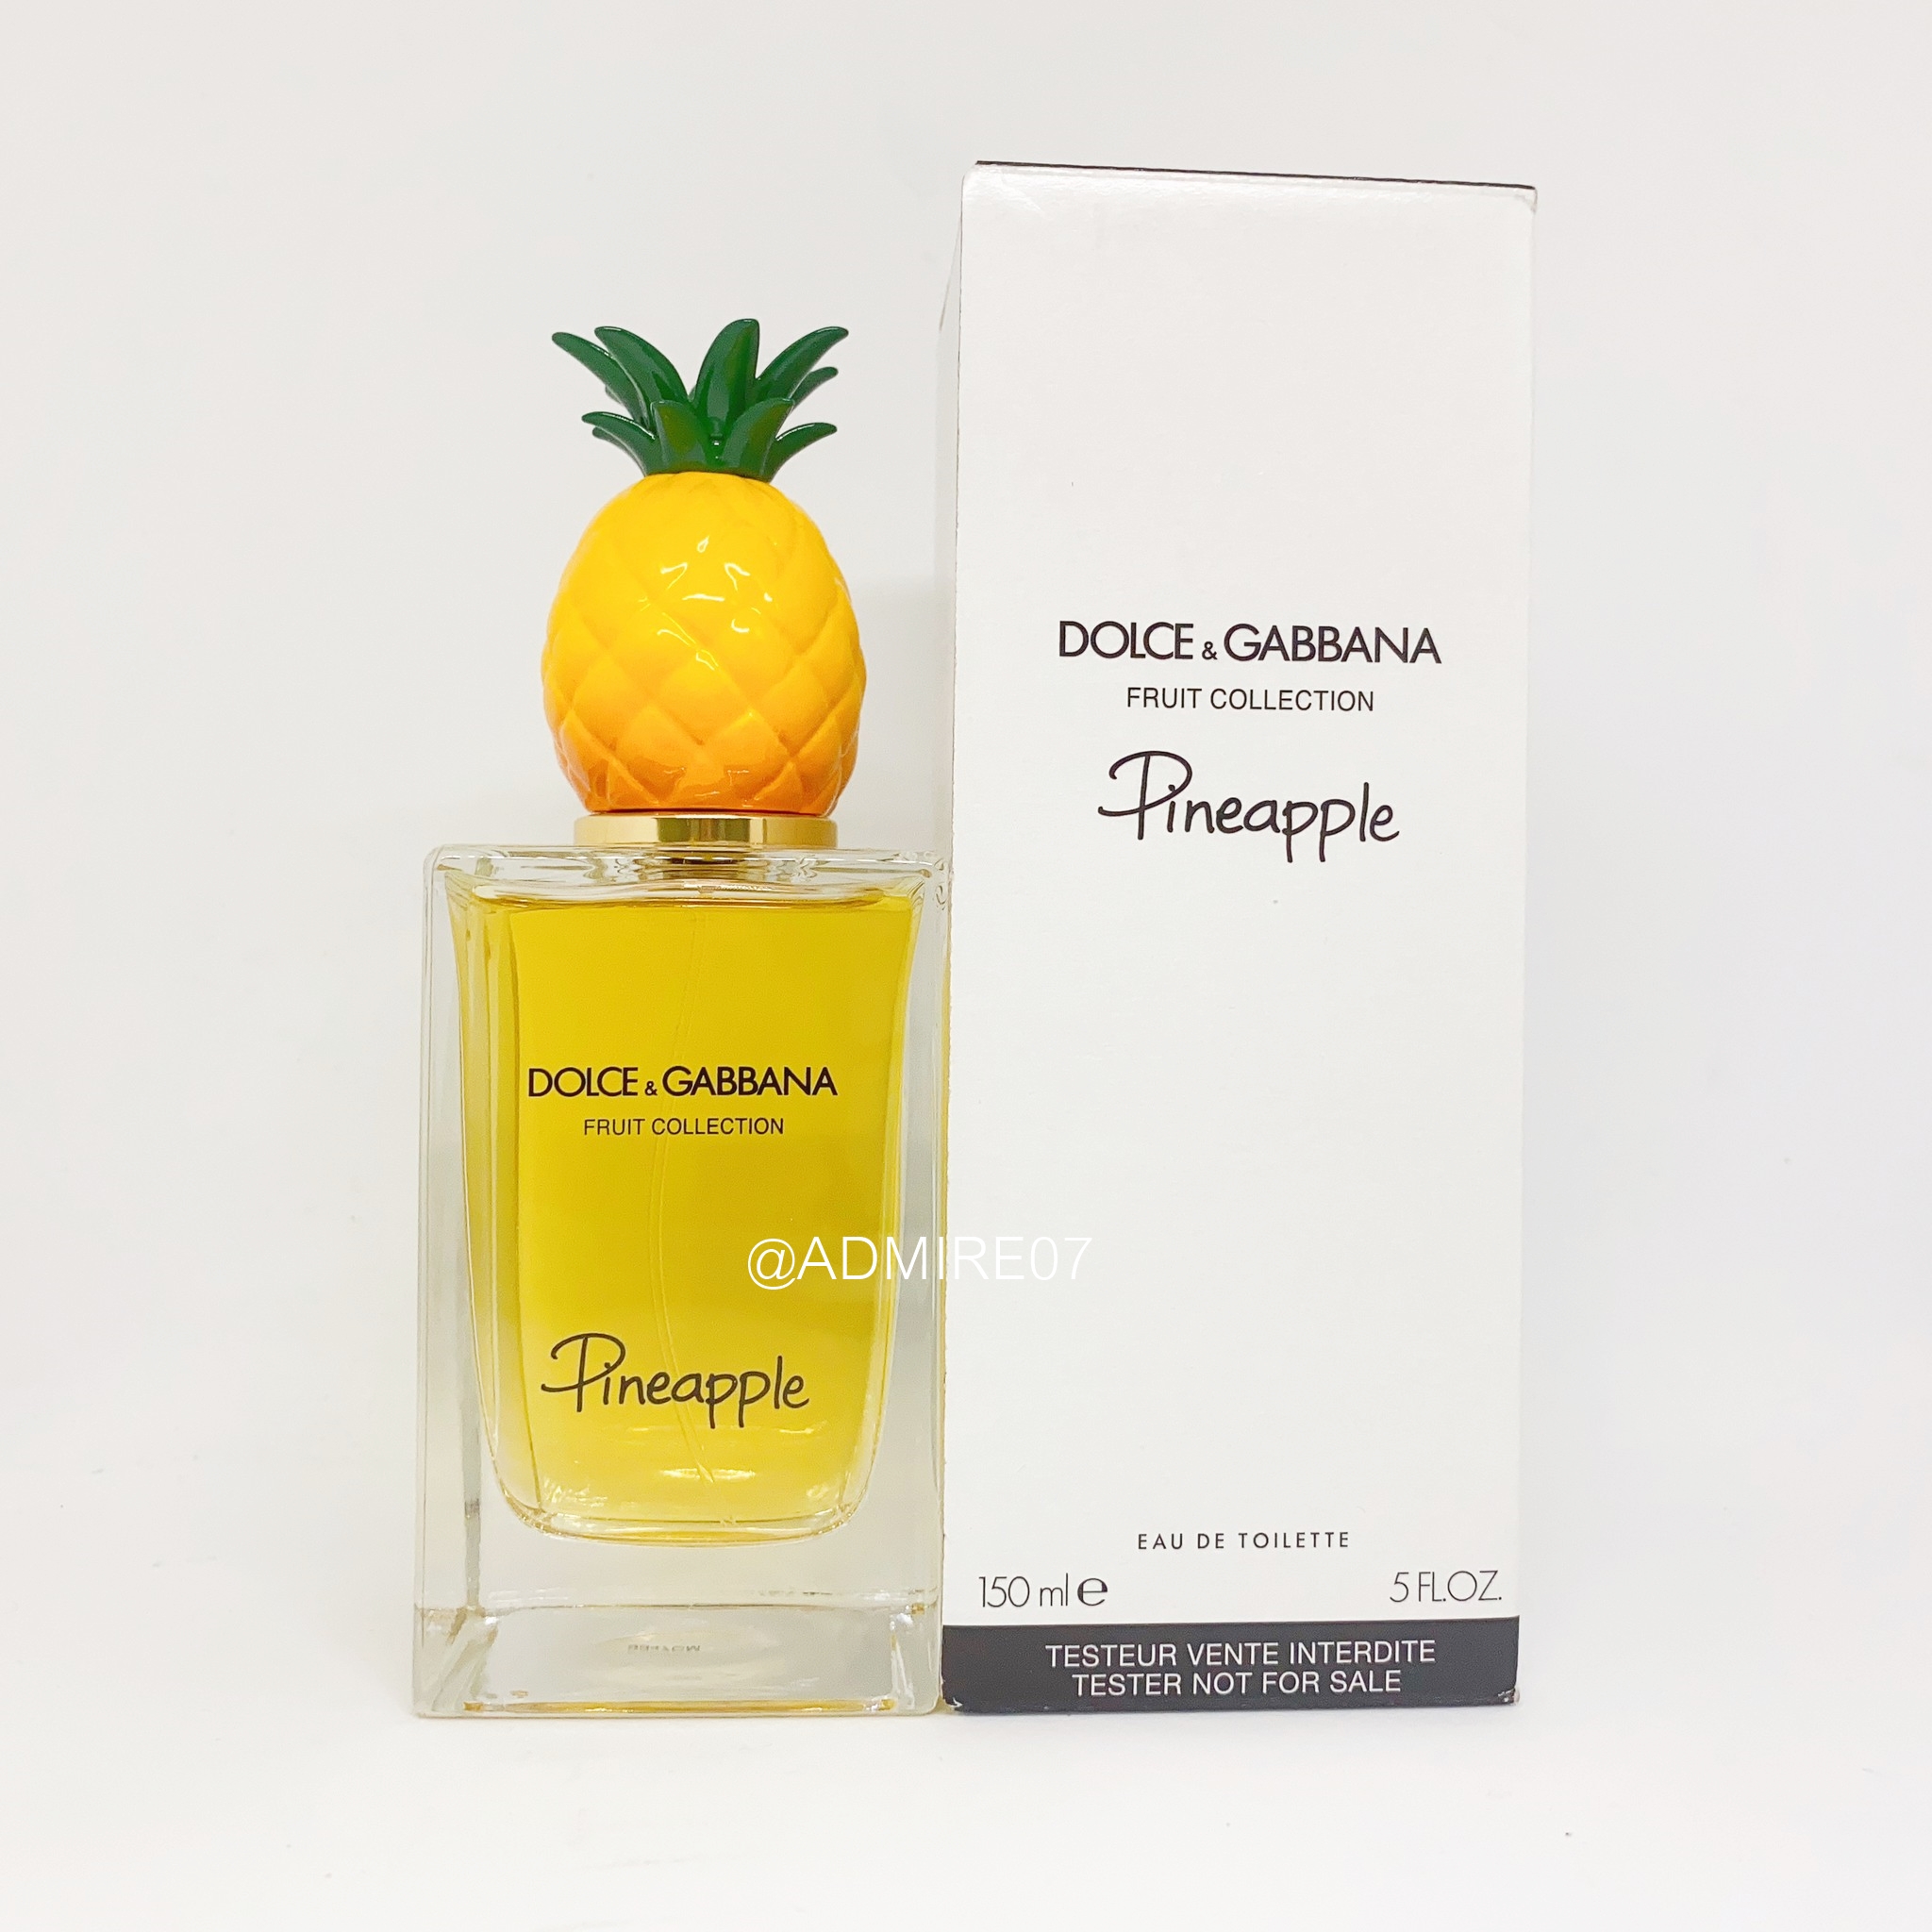 Dolce and Gabbana pineapple eau de toilette 